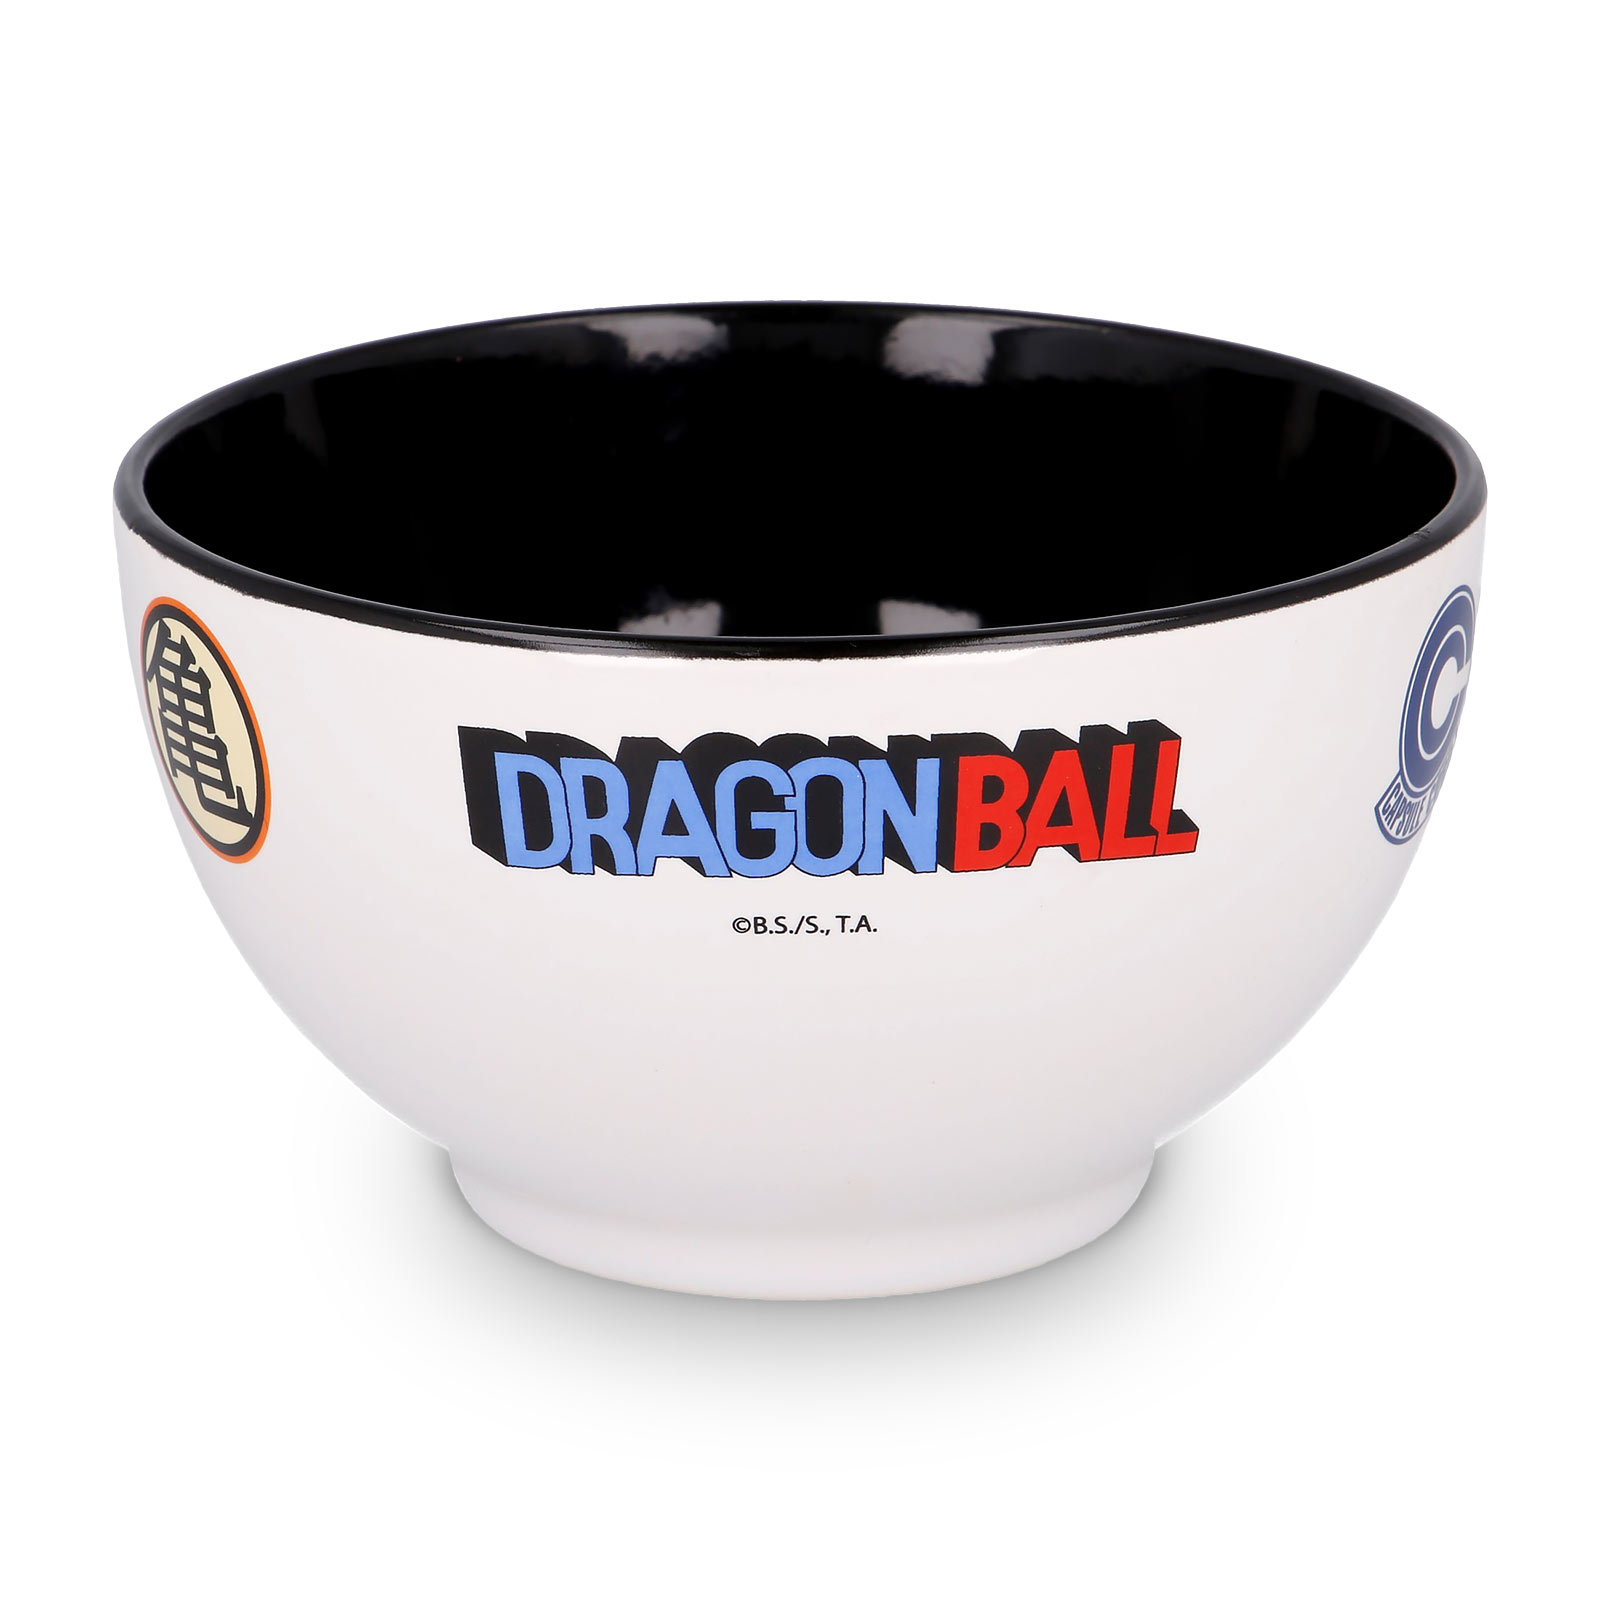 Dragon Ball - Bol de céréales avec icônes